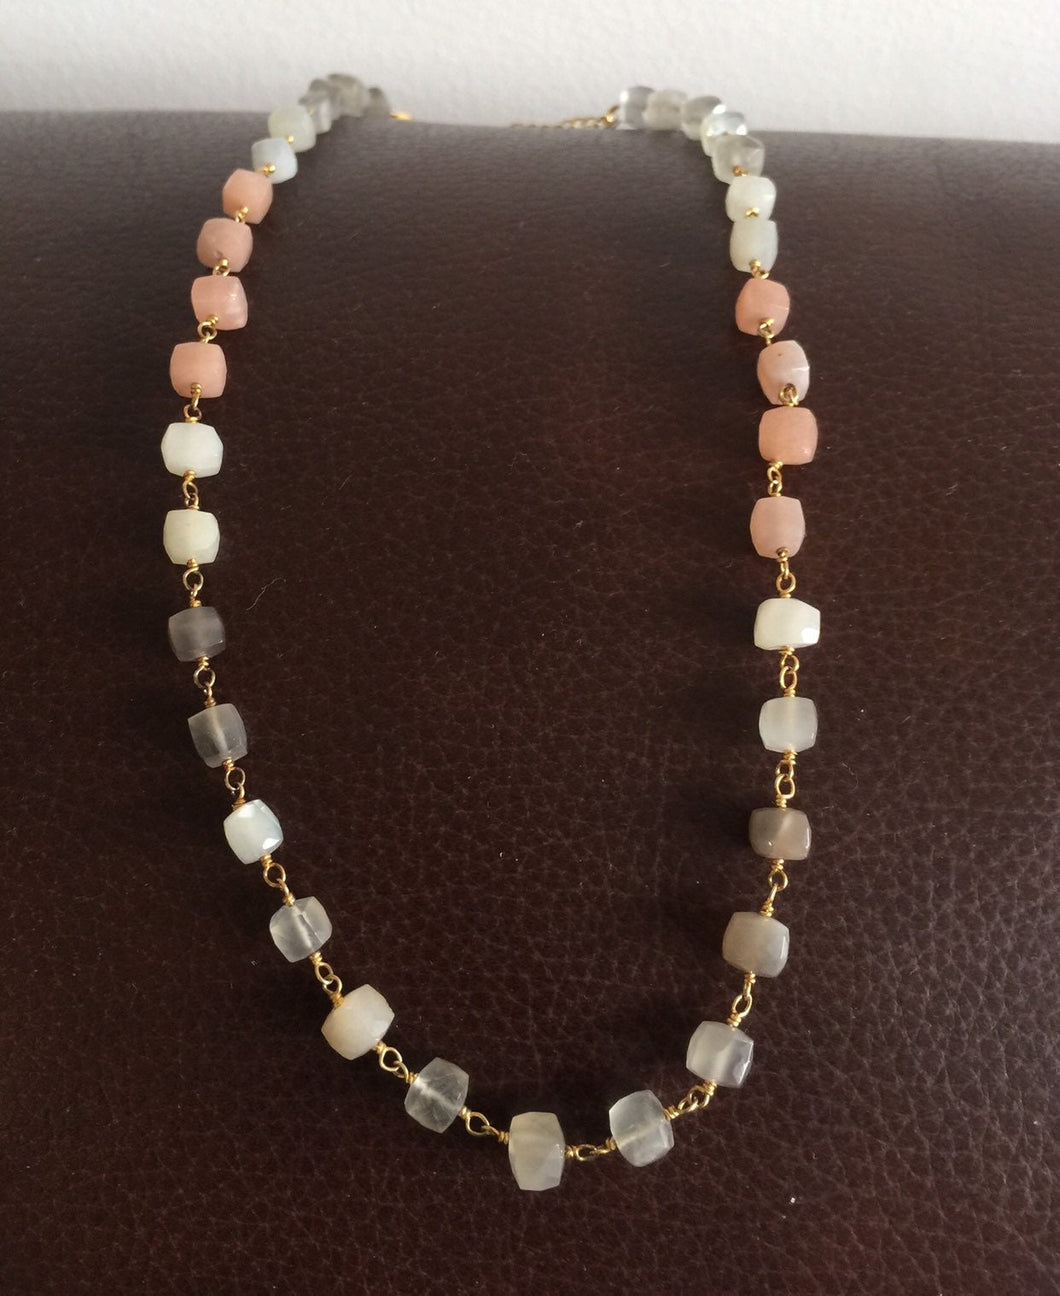 stone beads necklace,peach grey moonstone necklace,bead necklace,gem stone necklace,grey peach moonstone necklace,cut stone necklace